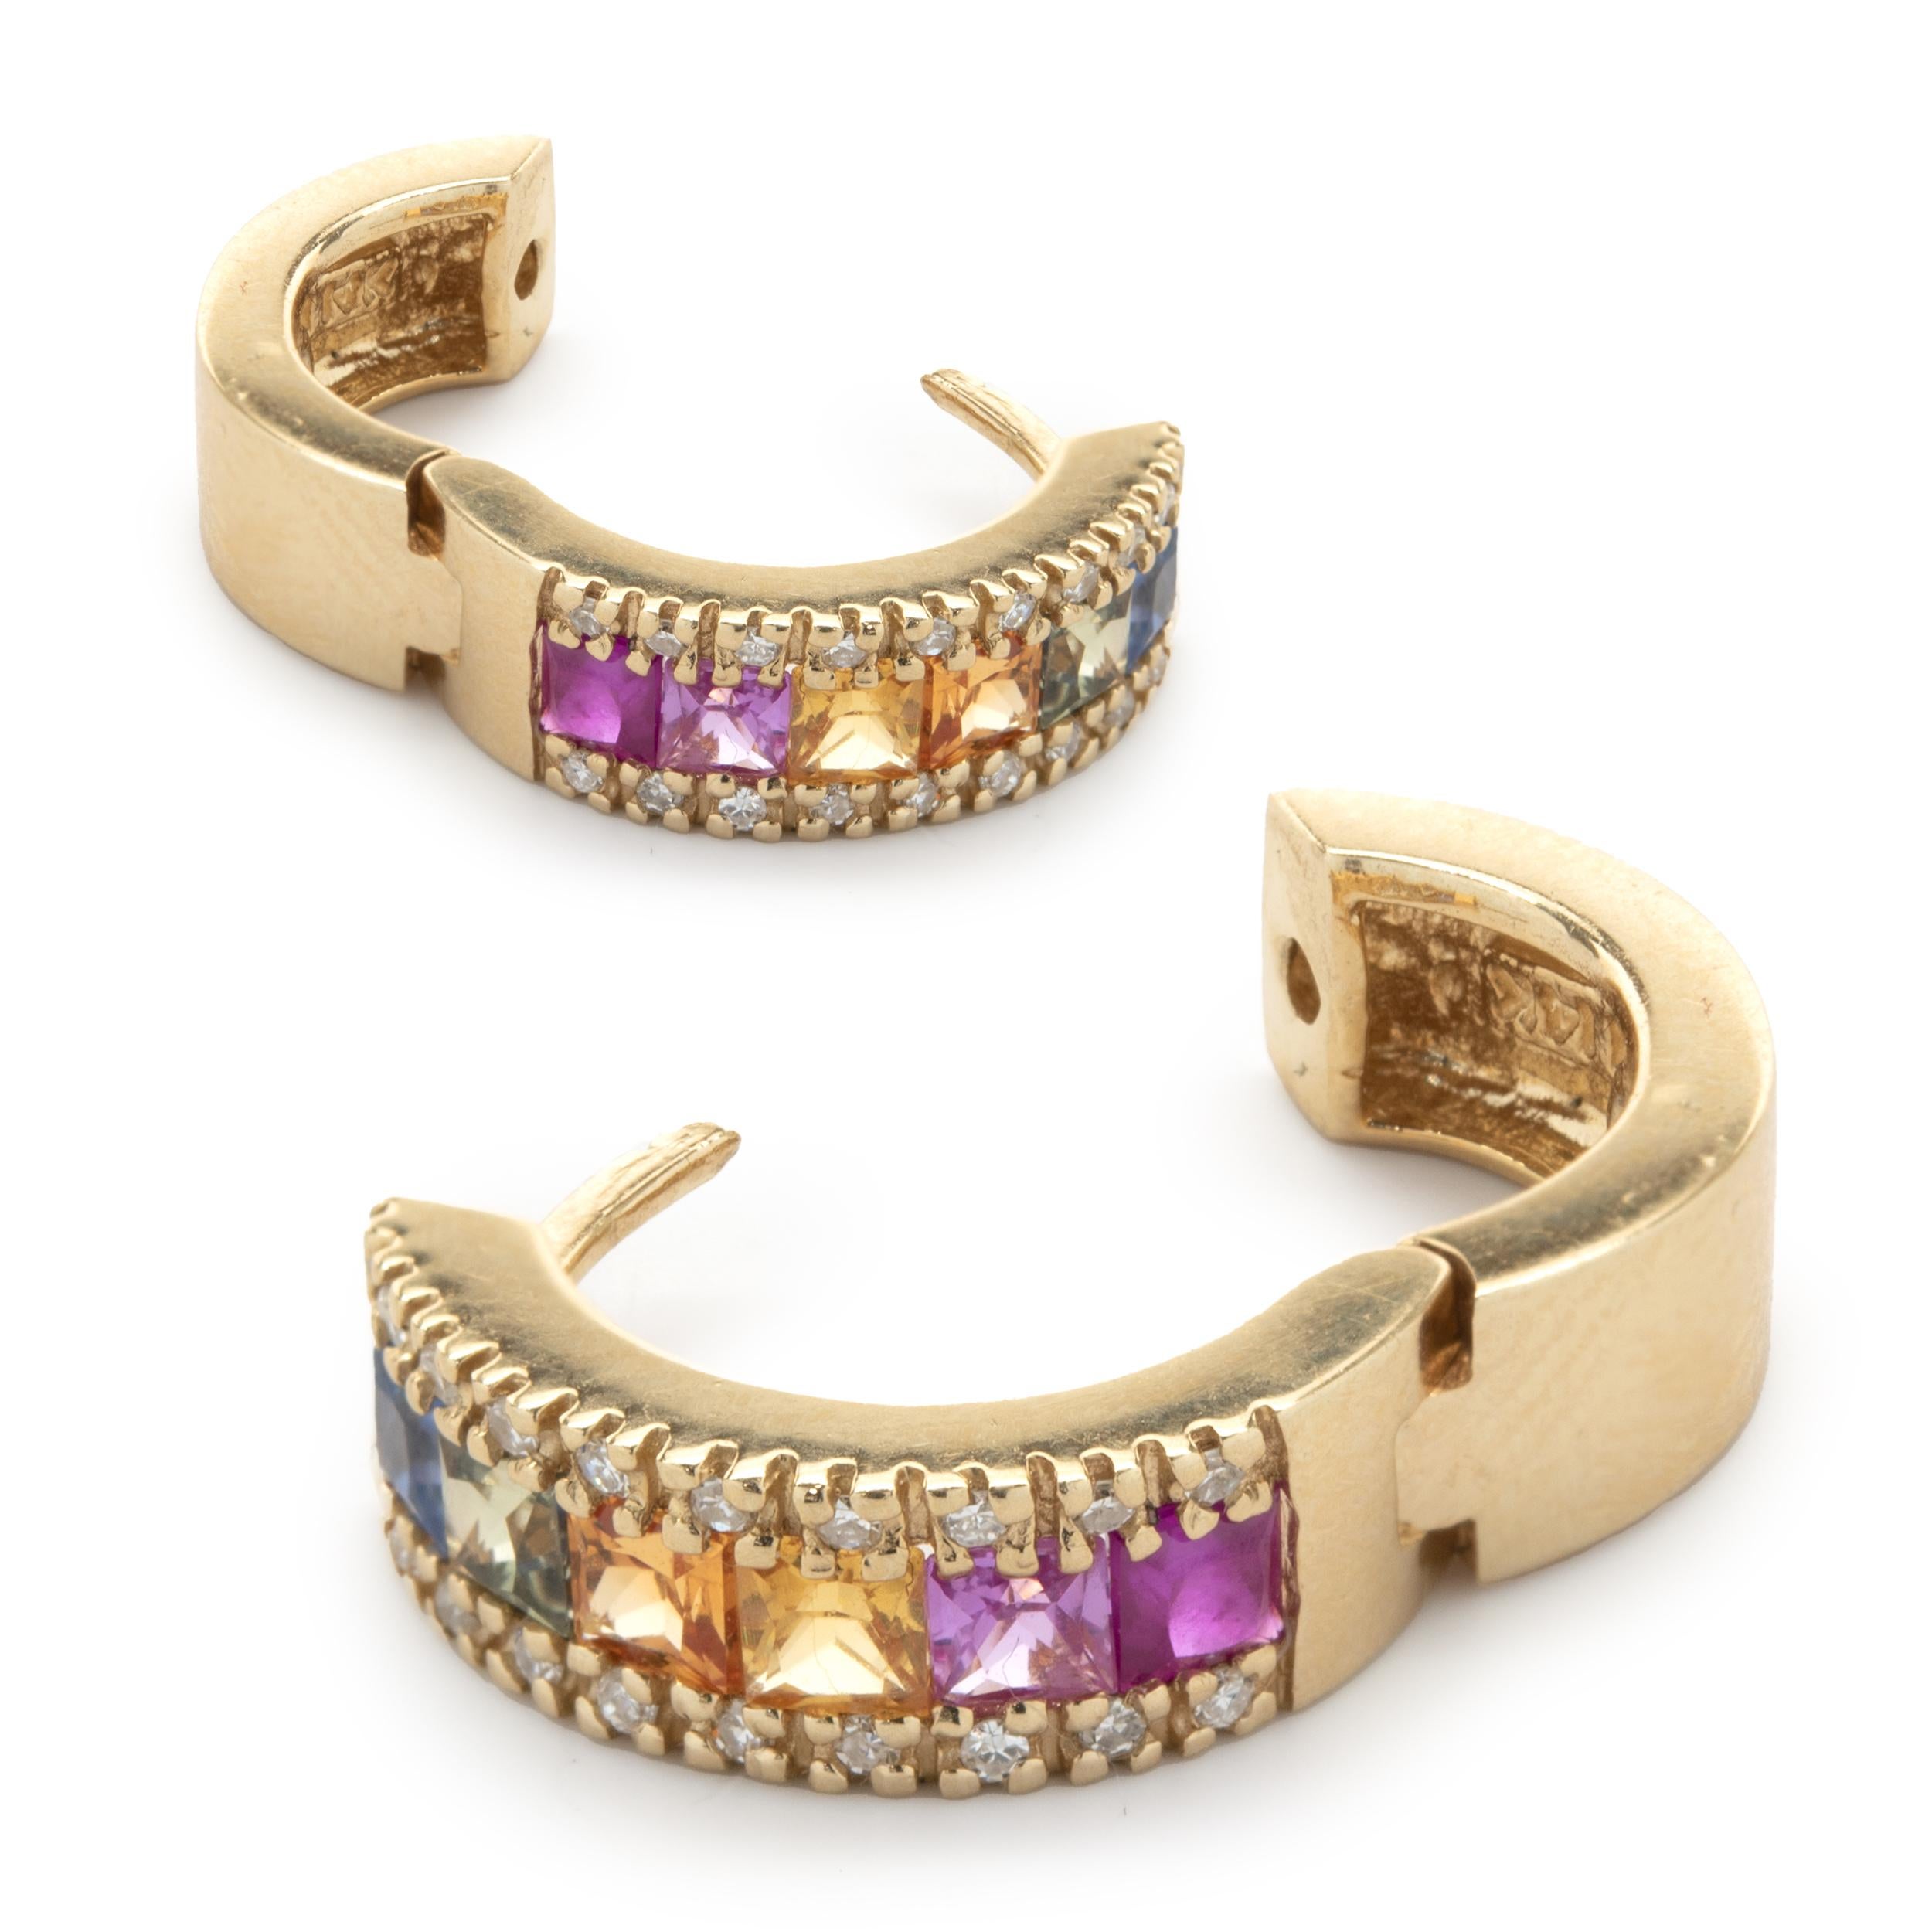 multi colored sapphire earrings